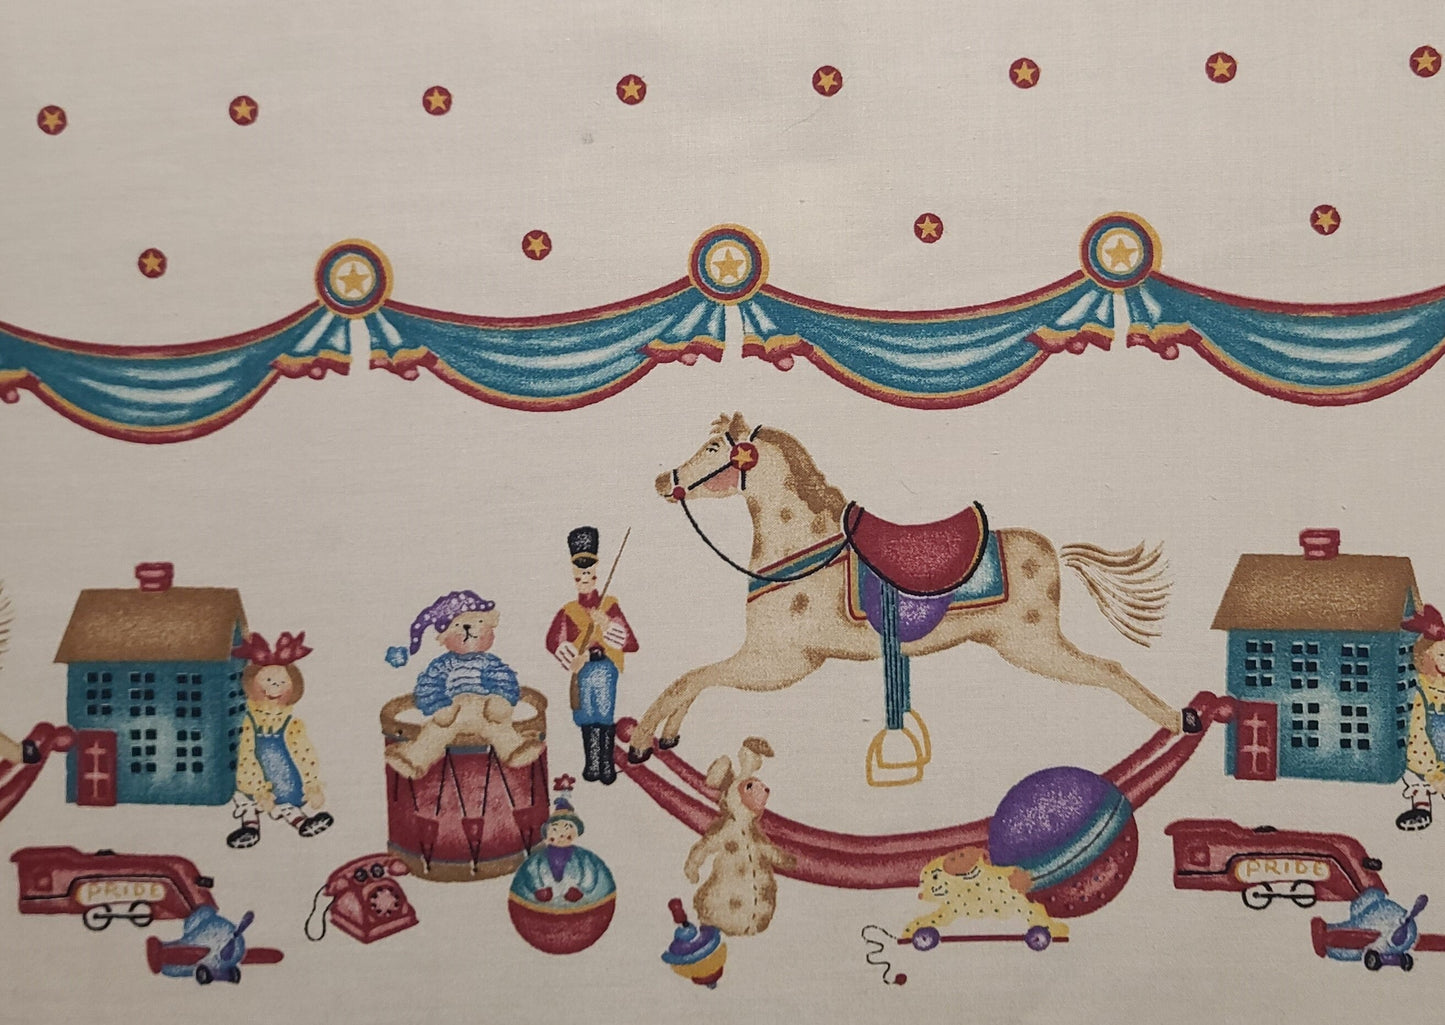 Vintage Rocking Horse Border "Past & Presents" for Daisy Kingdom 1996 - Double Border Print Tan Fabric